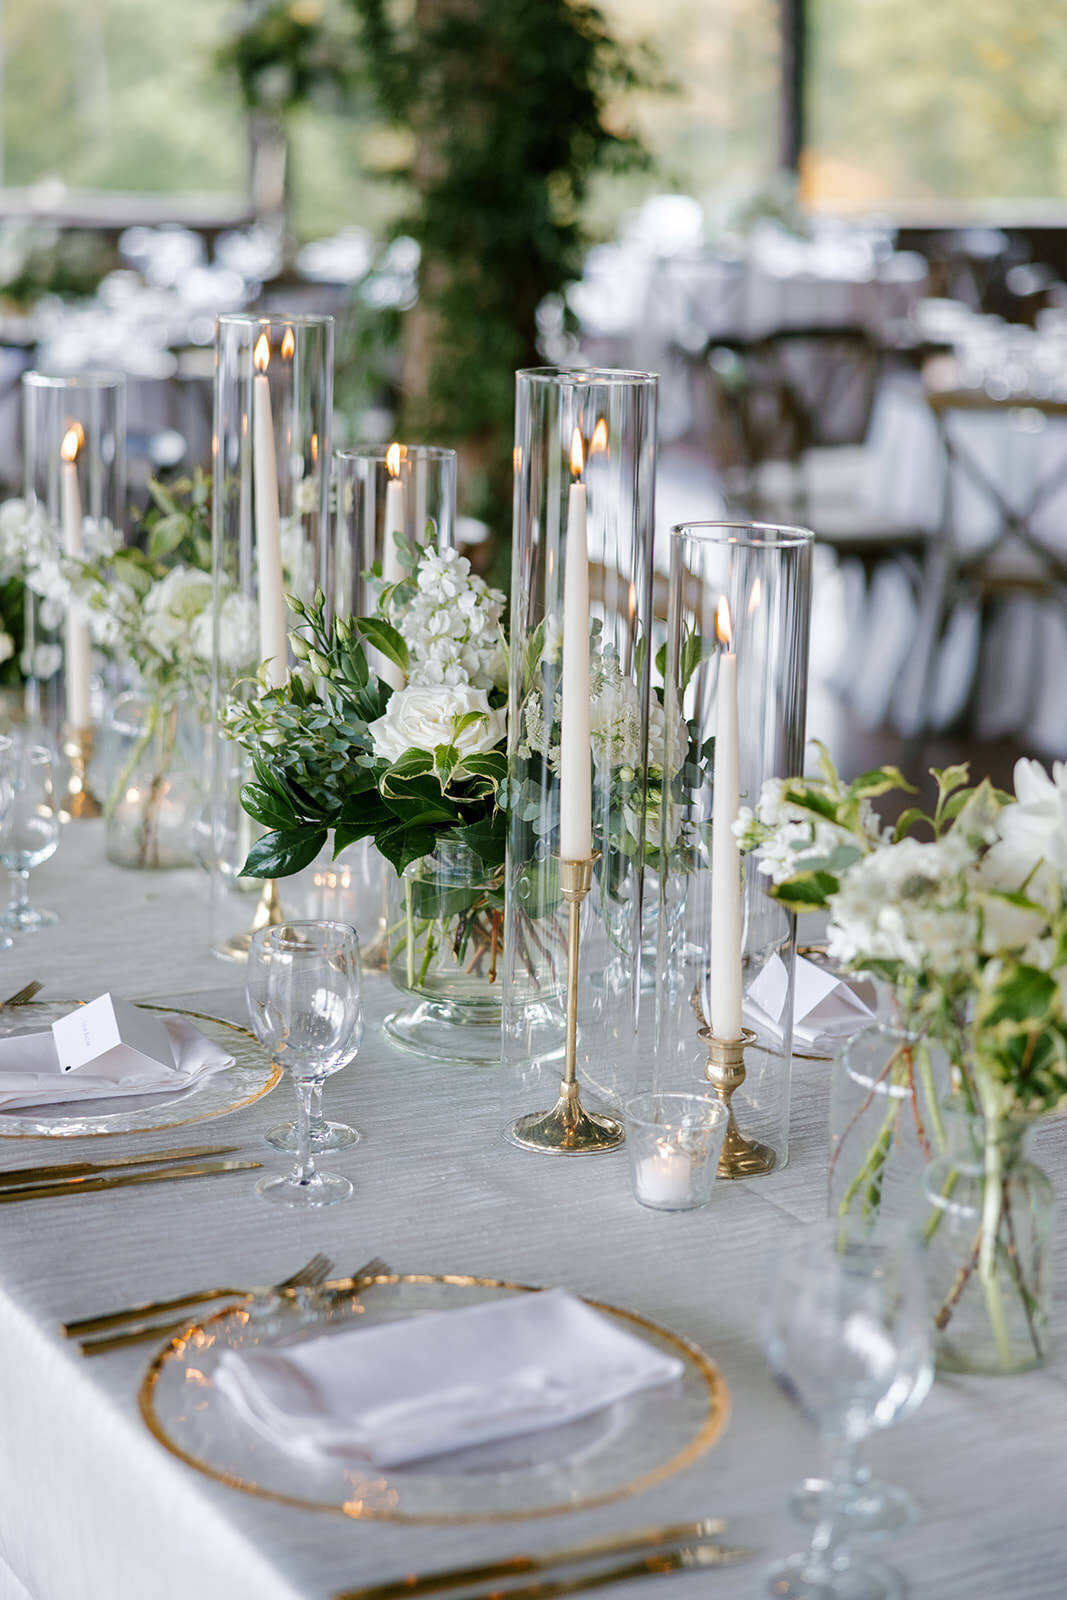 wedding reception dinner table